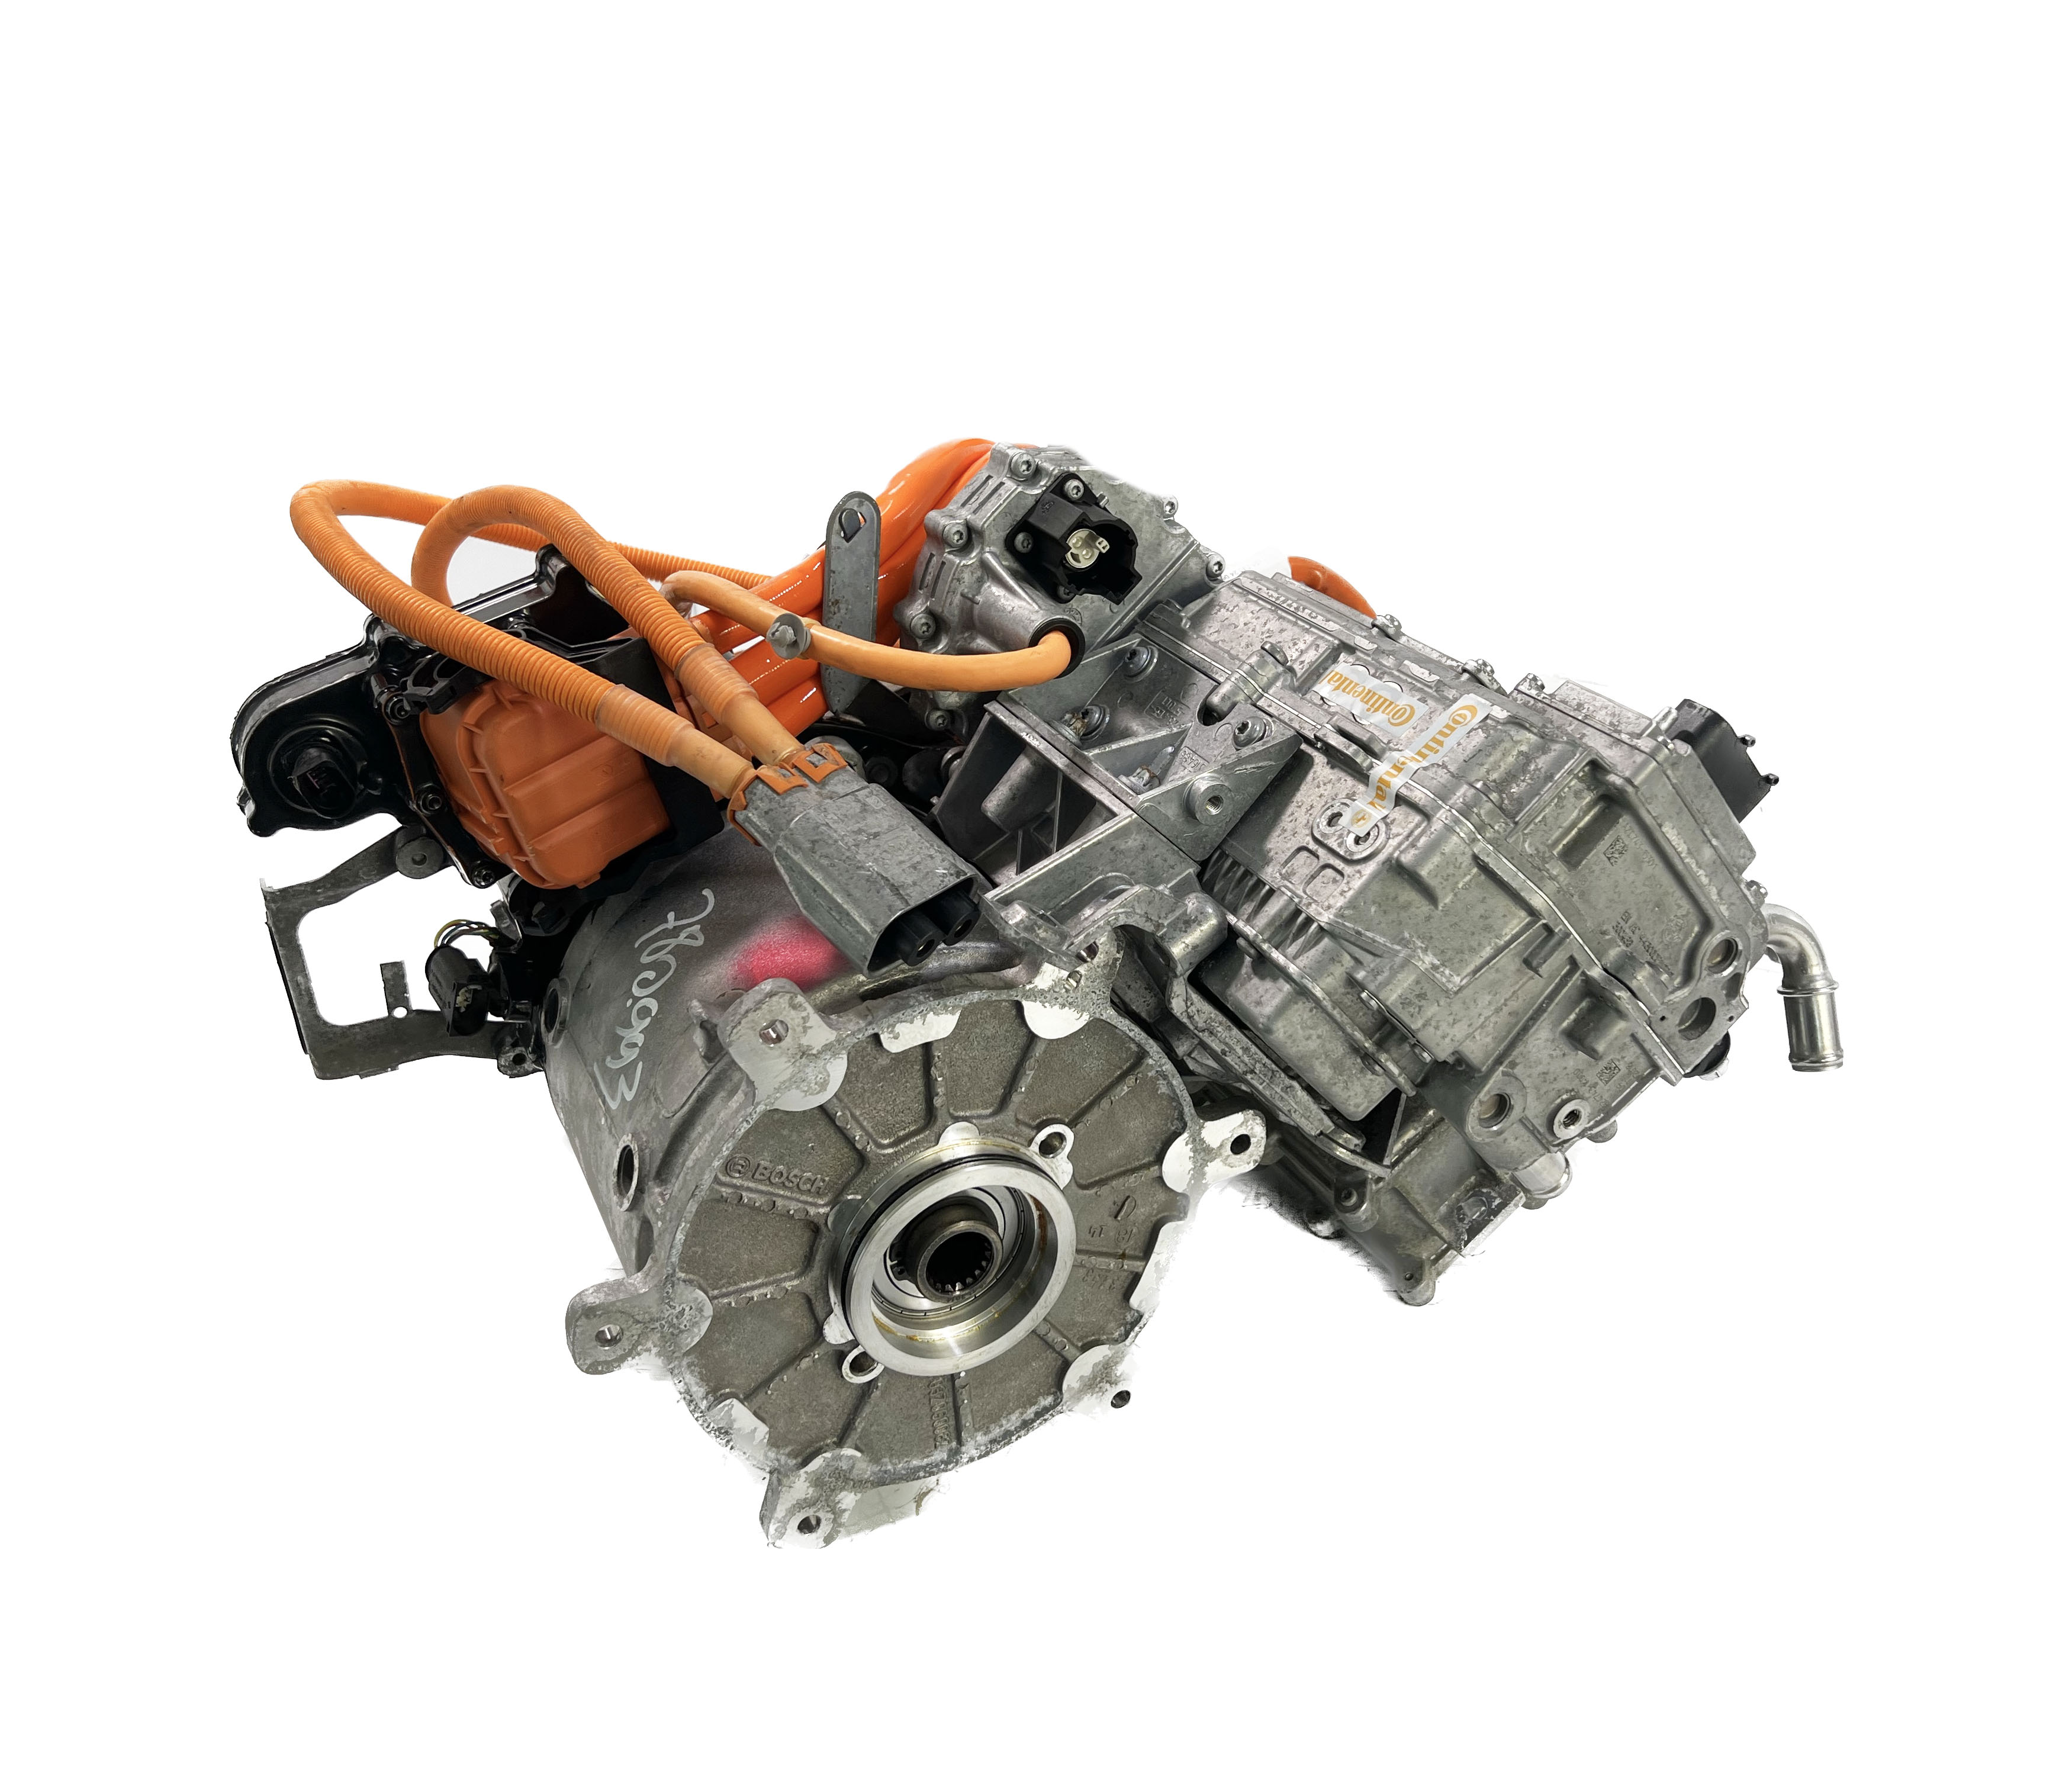 Elektro Elektromotor Motor für Smart Fortwo 5AL 780.993 EM780.993 A4519007802